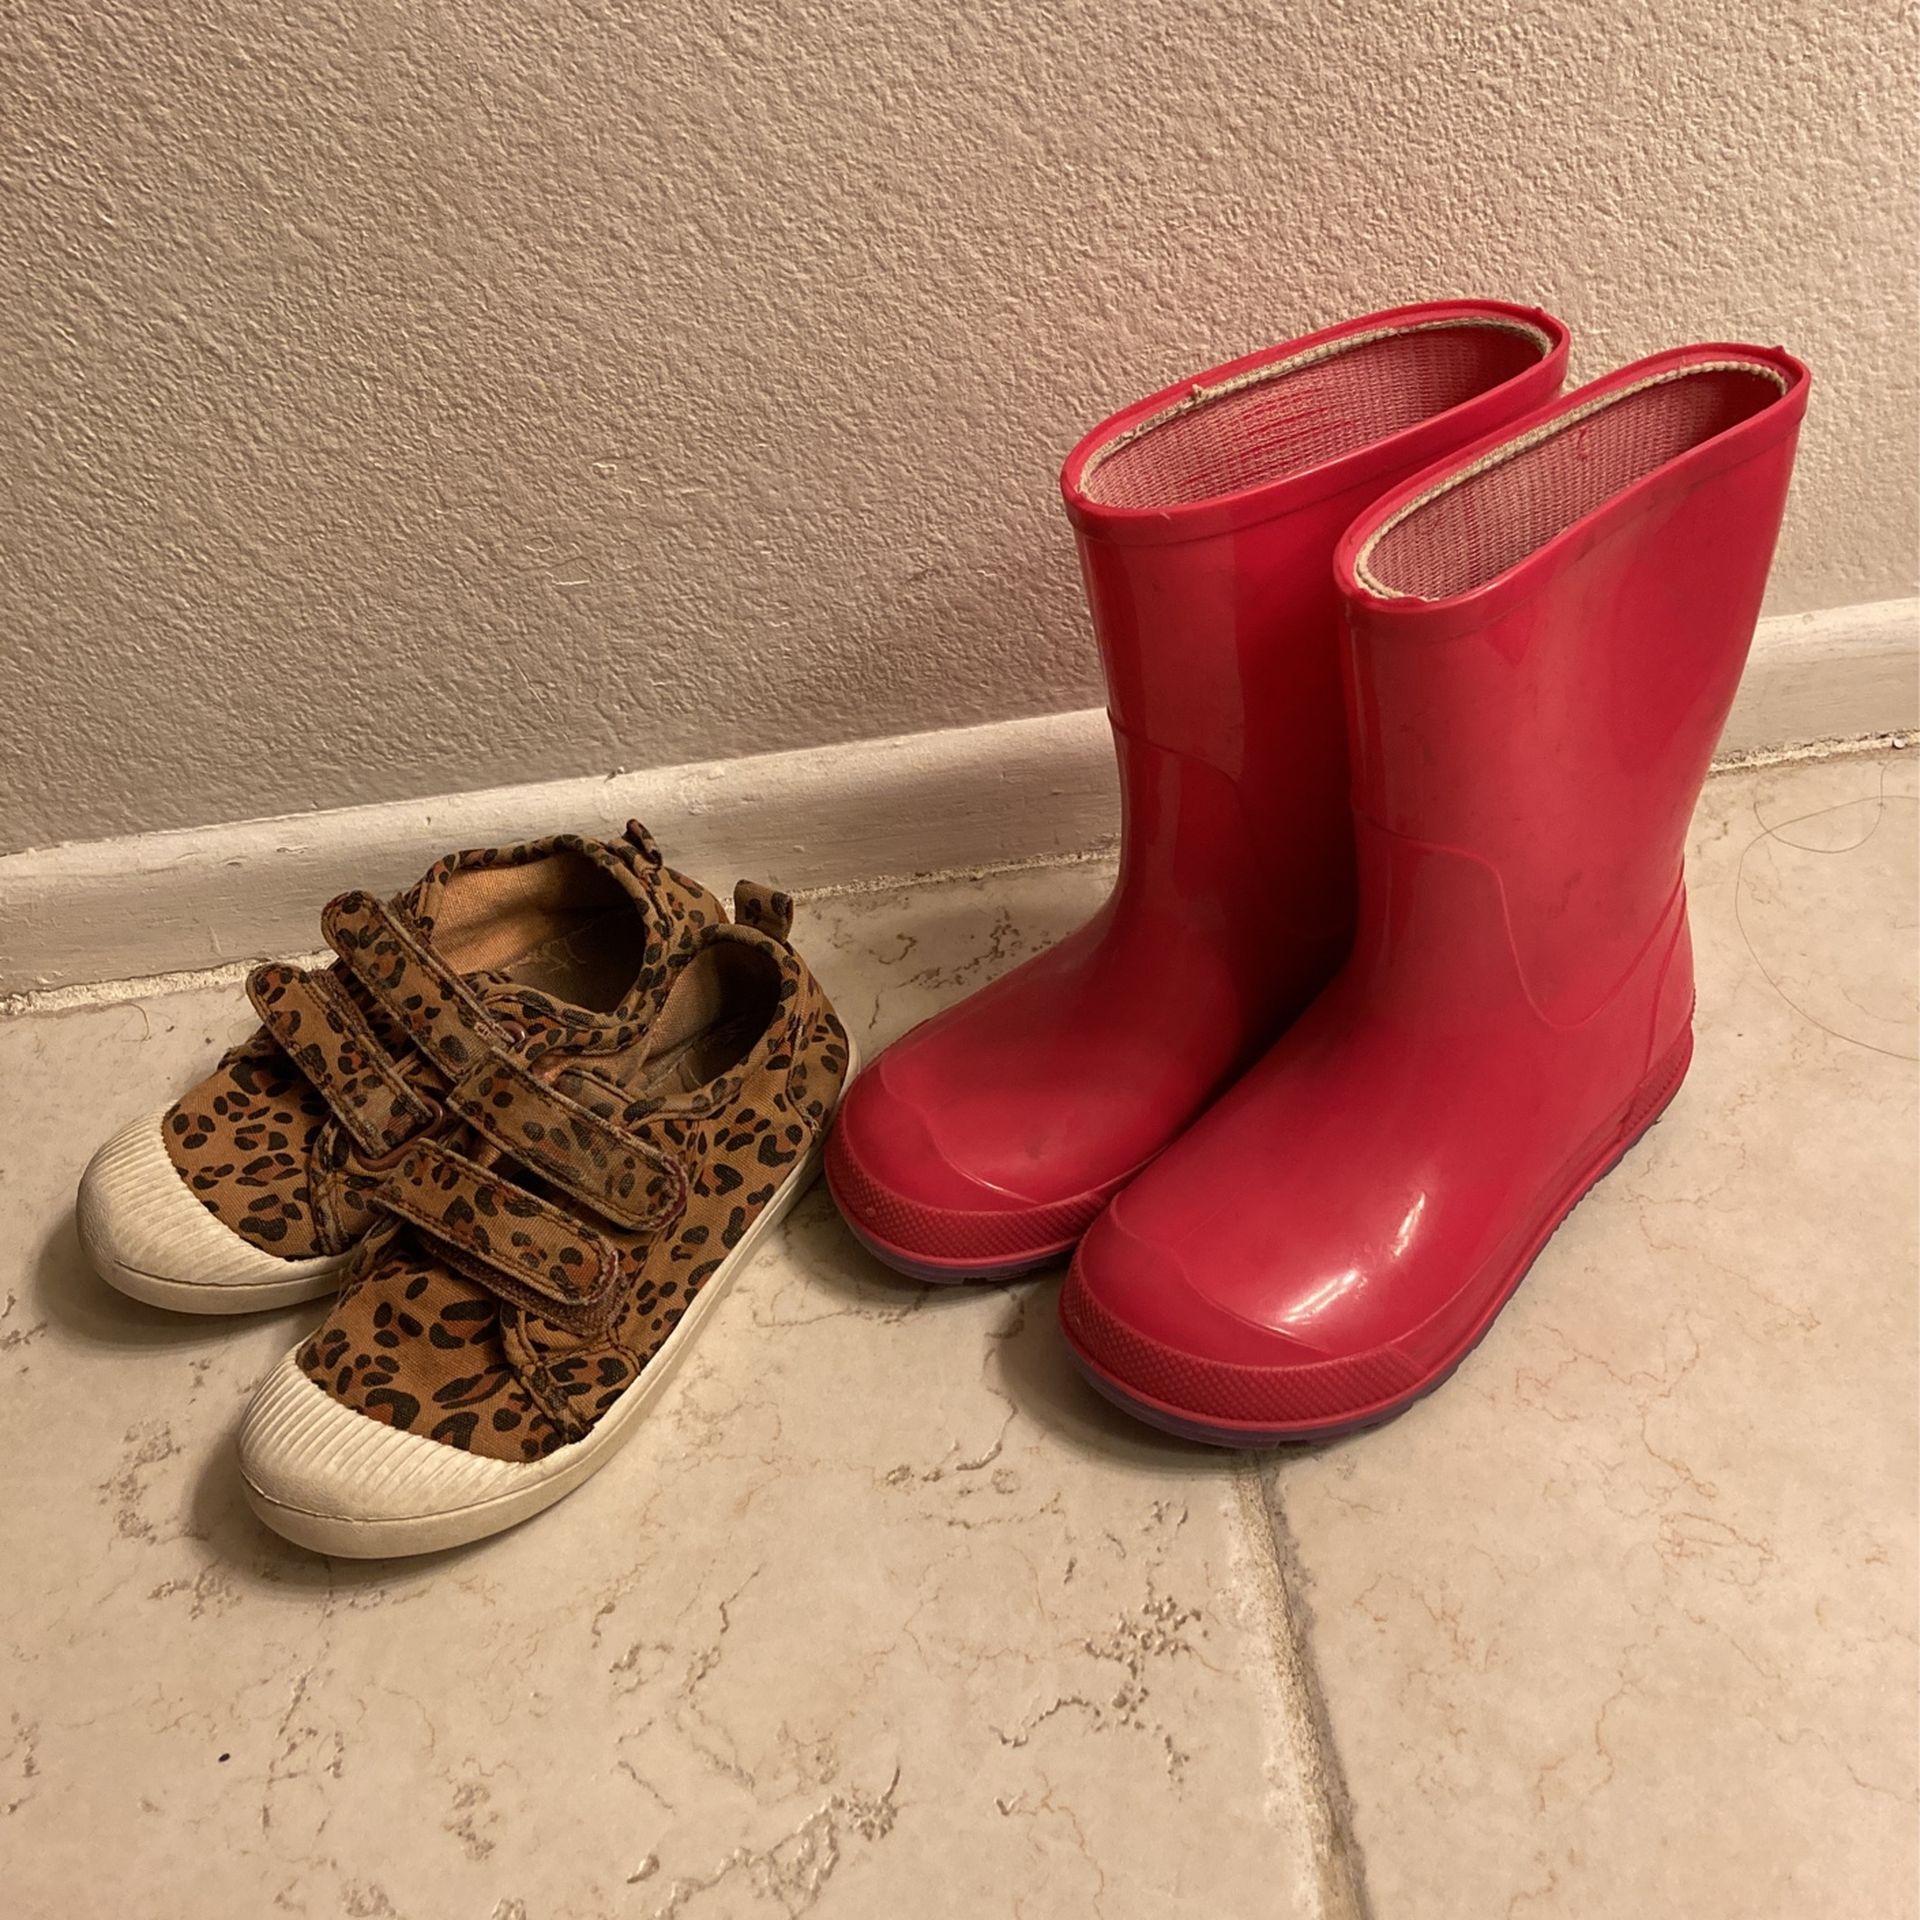 Girls Shoes & Rain Boots Size 9/10